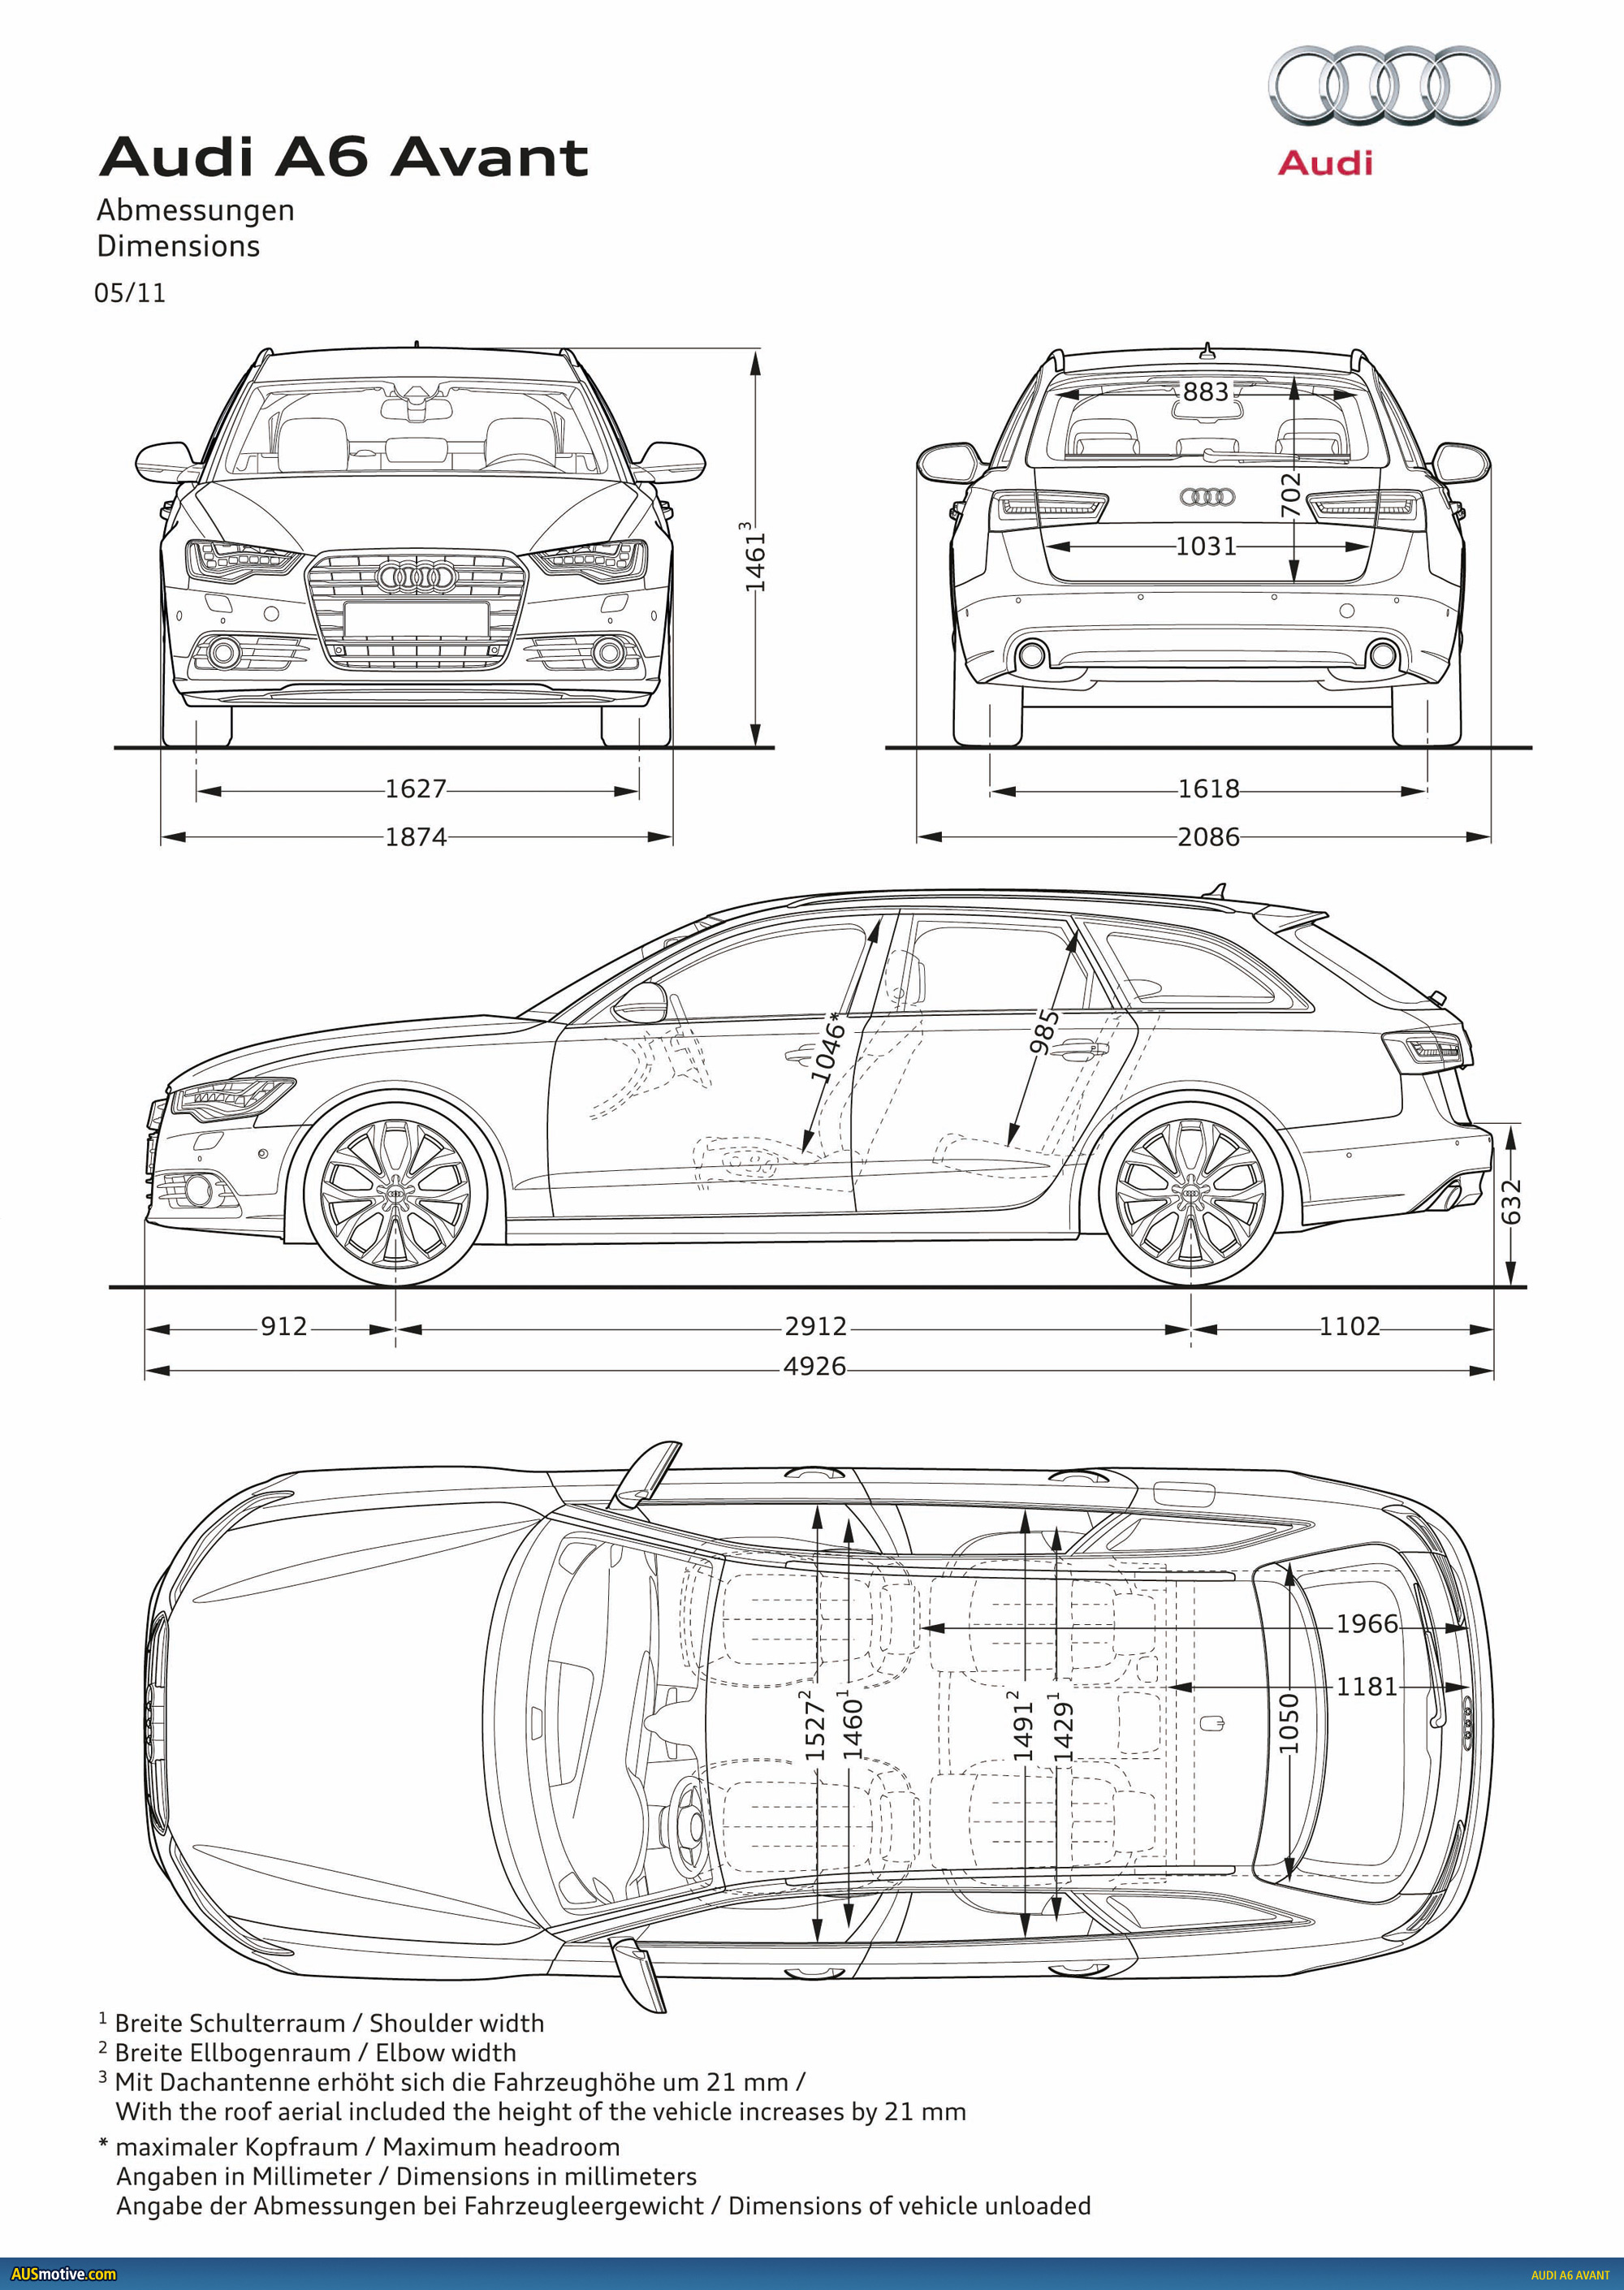 Audi A6 Avant Photo Gallery Ausmotive Com